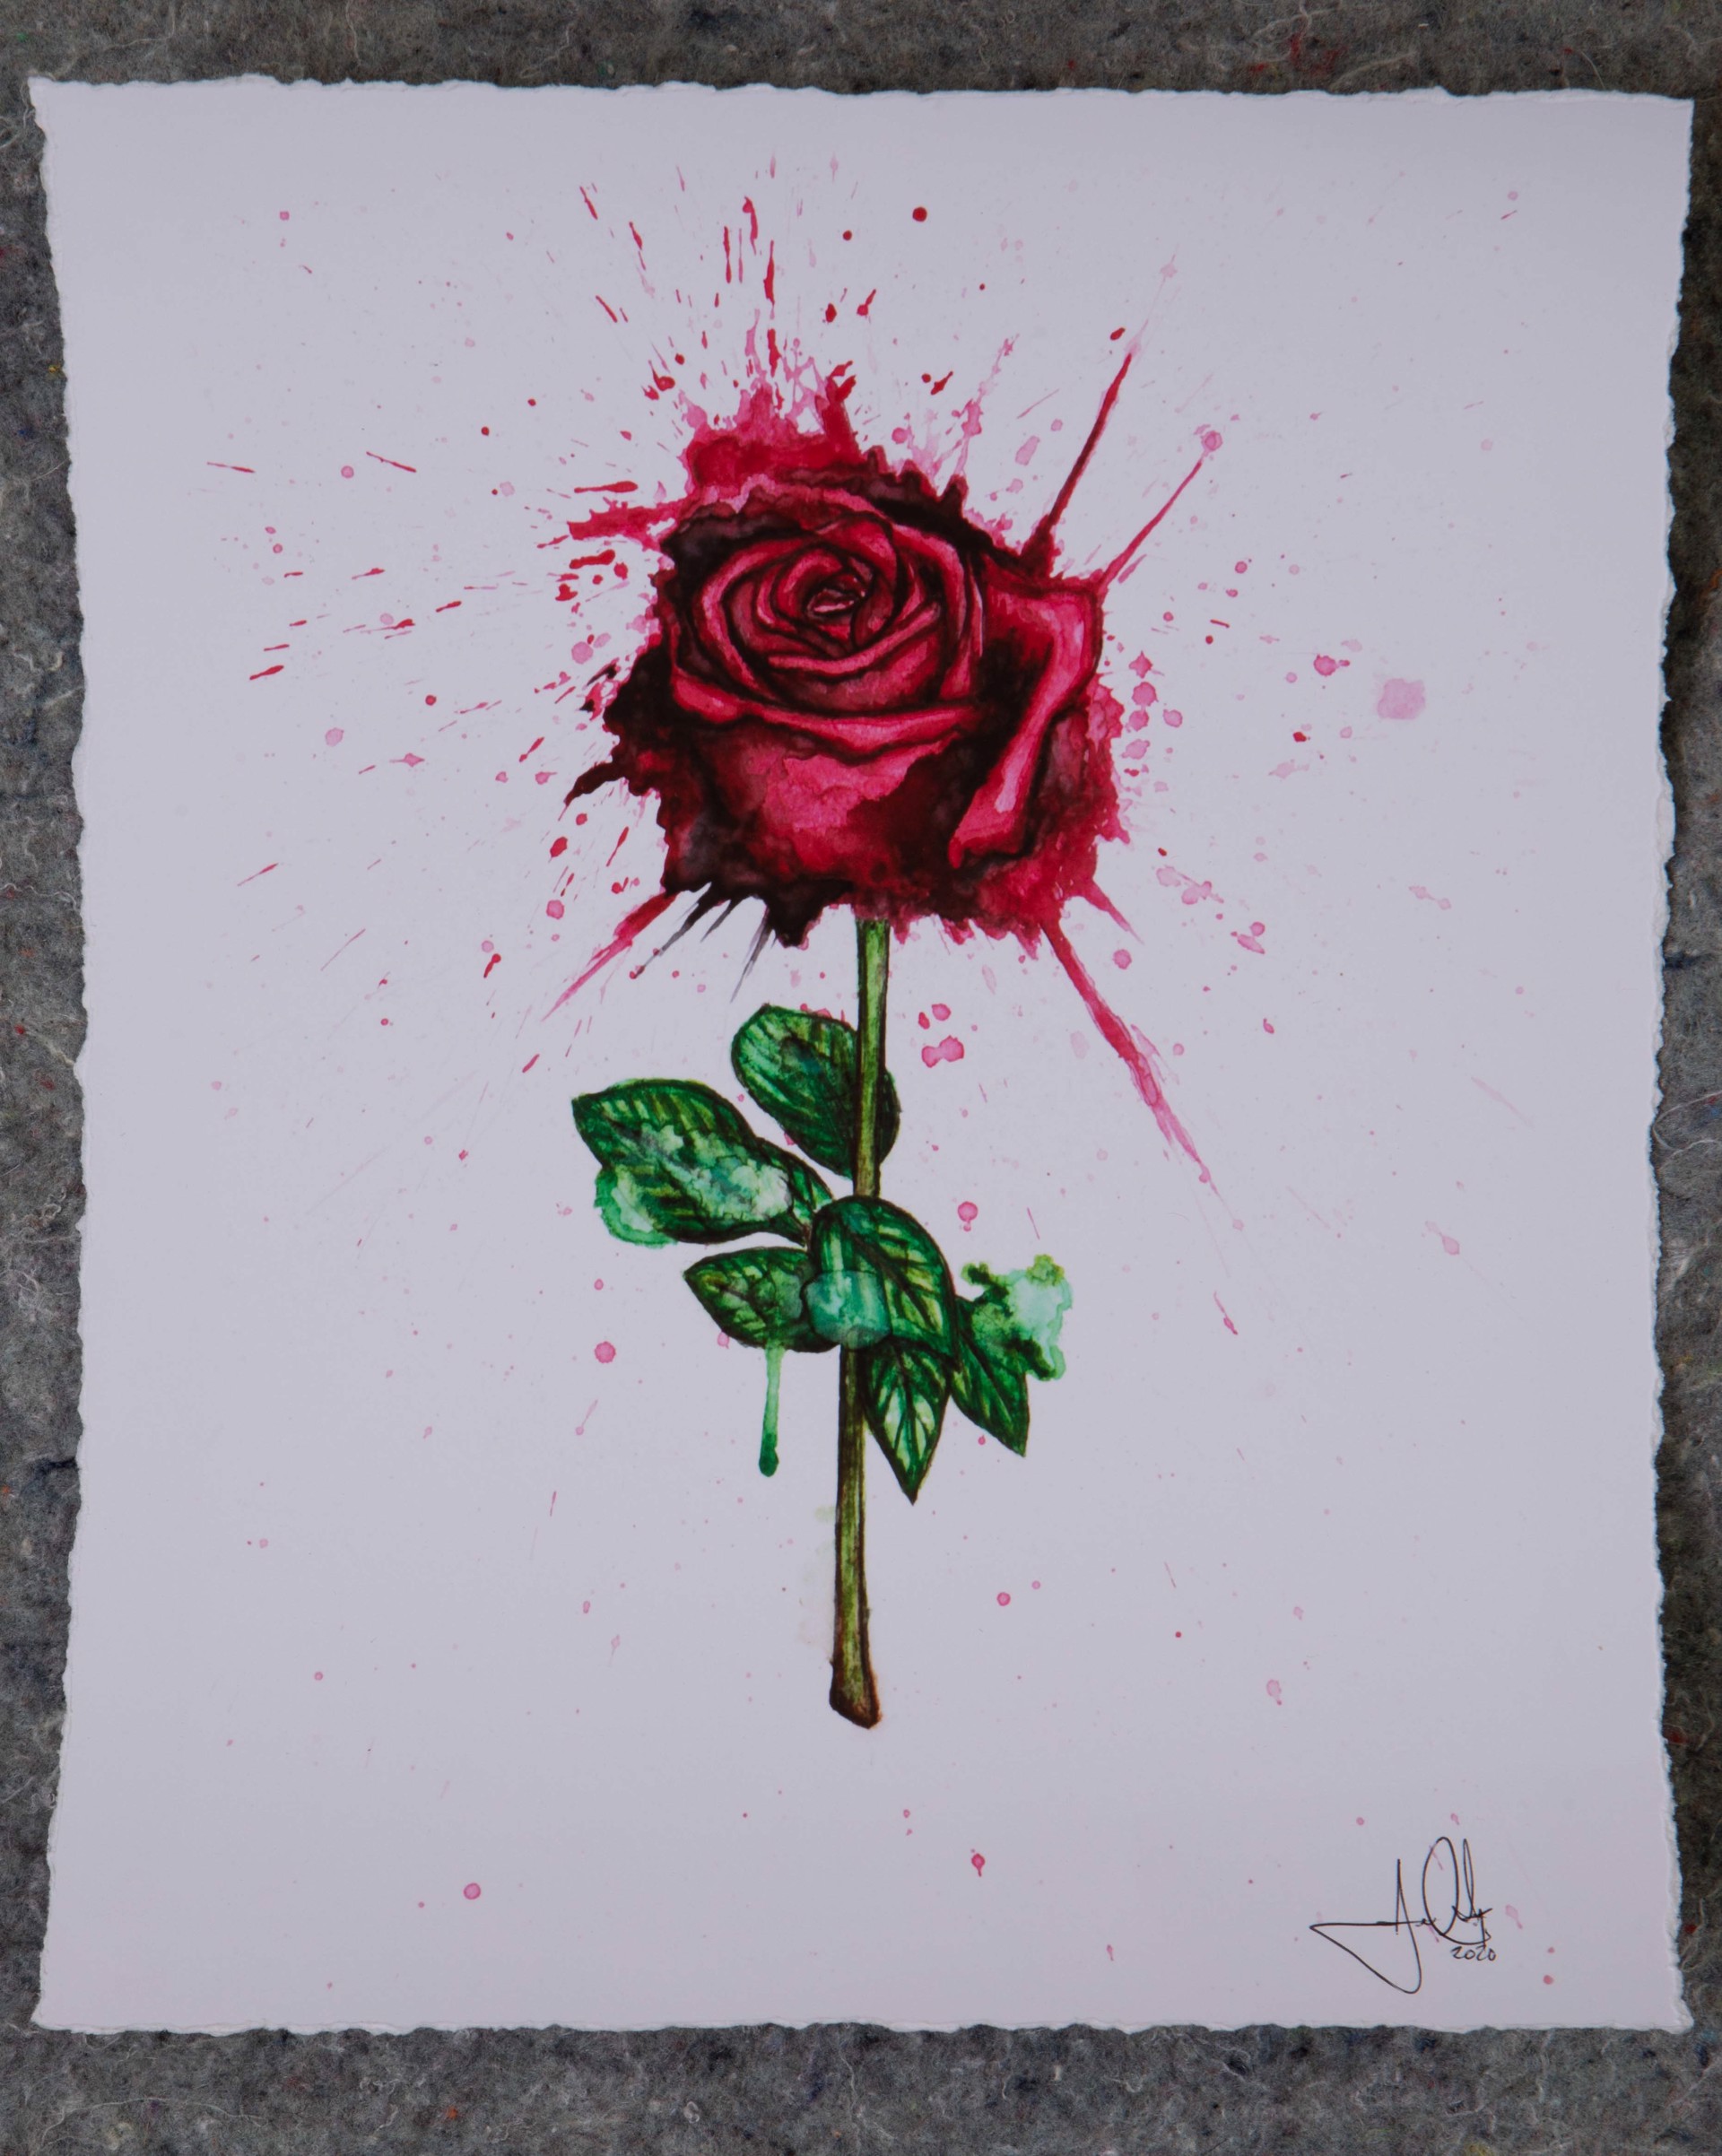 Splatter Painted Rose by Jenna Morello